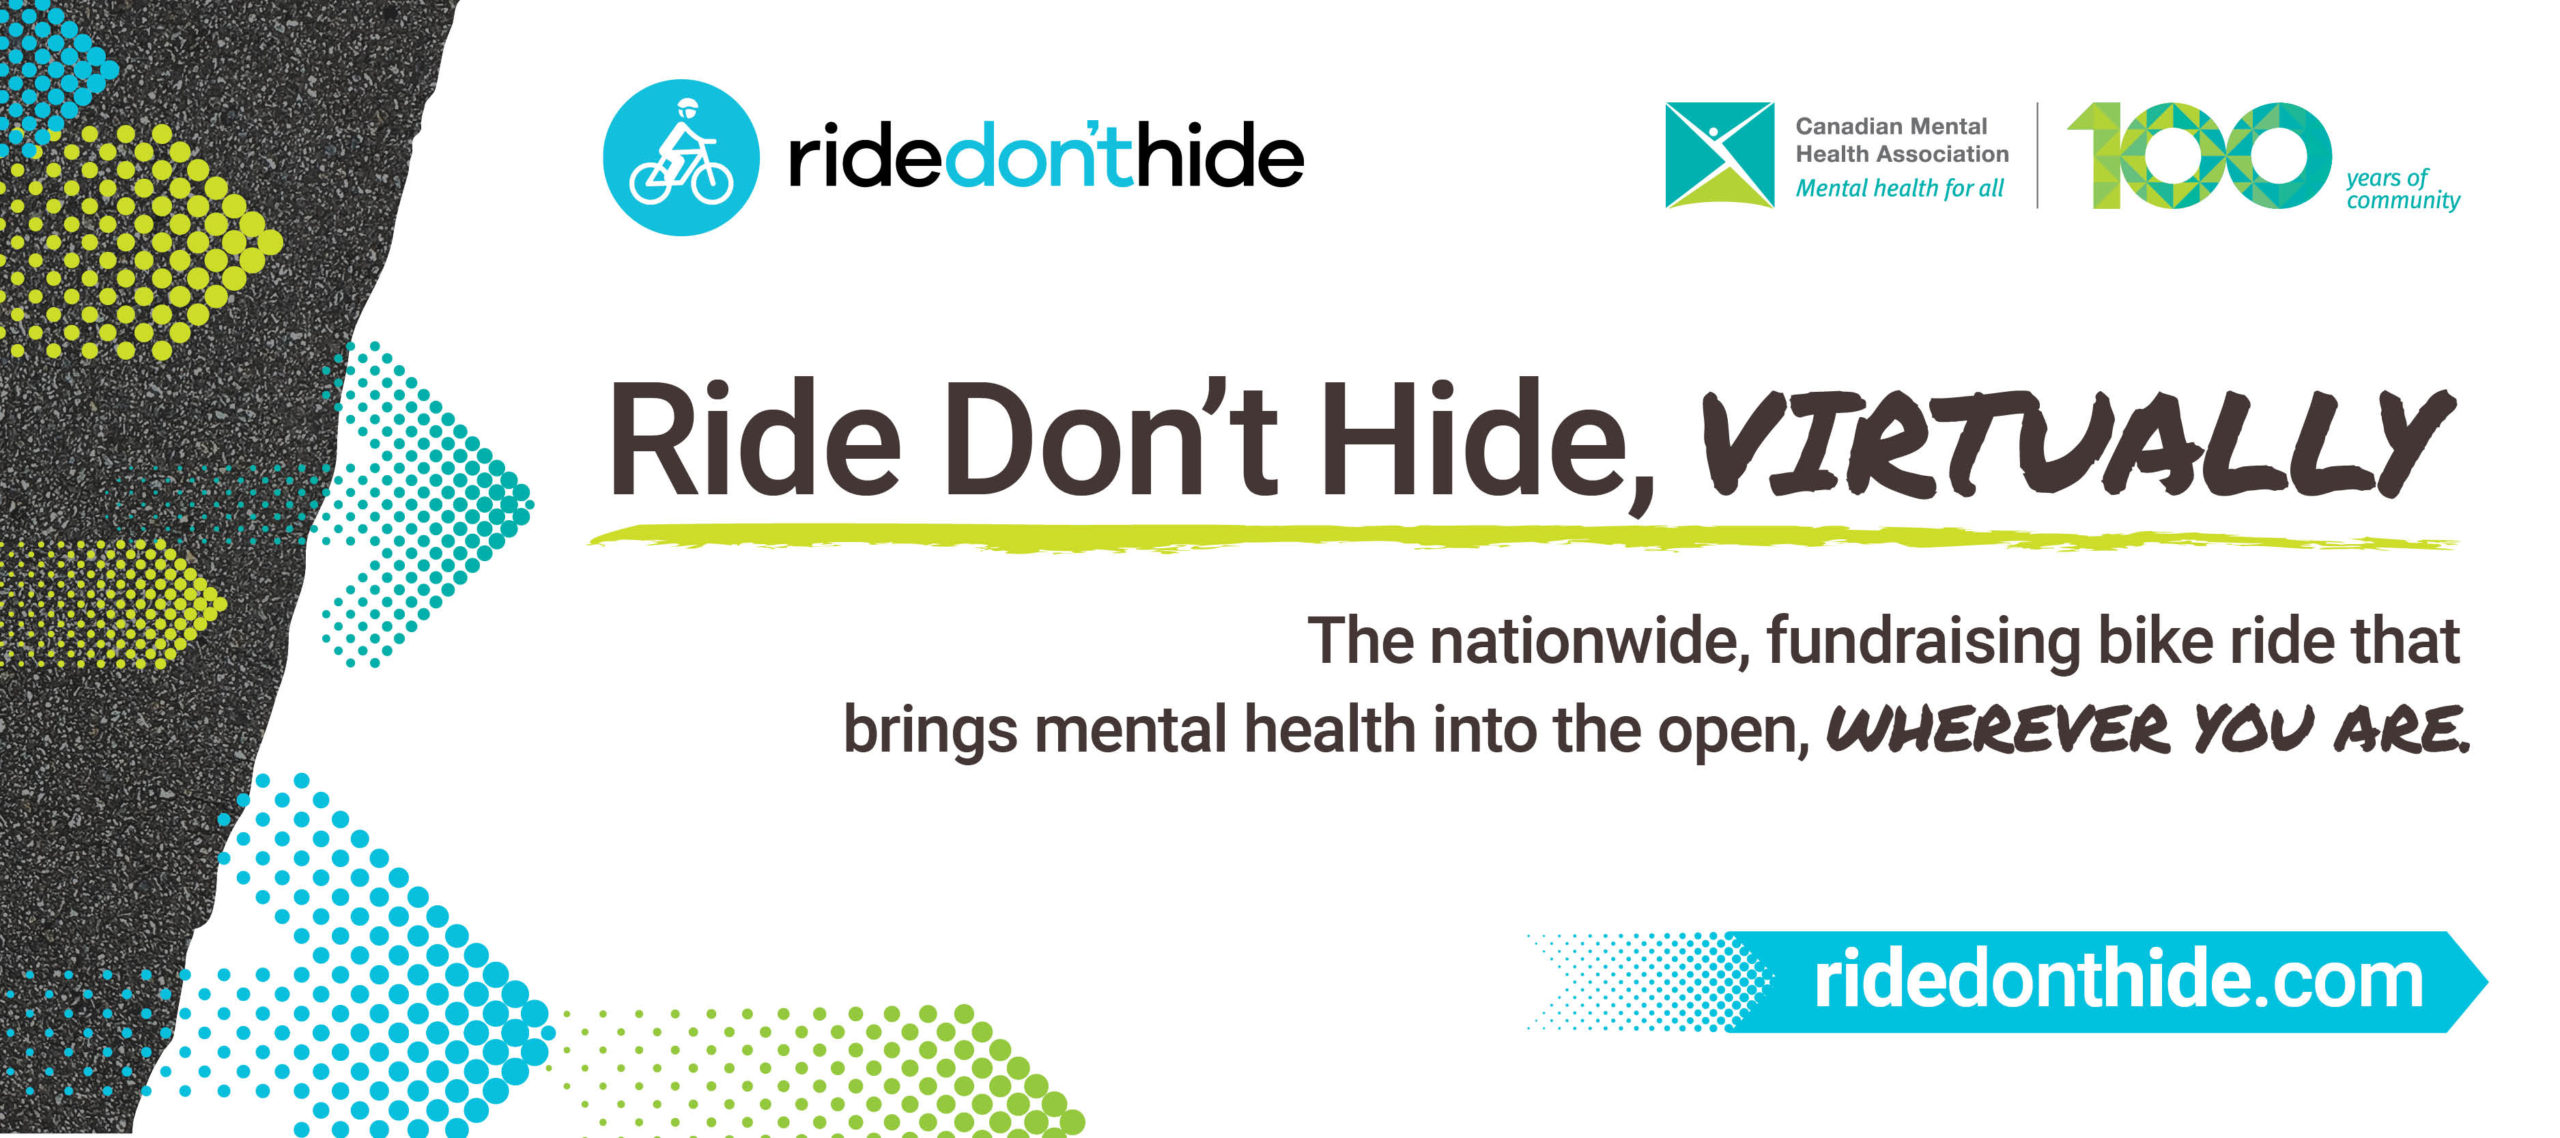 Ride Don't Hide, Virtually